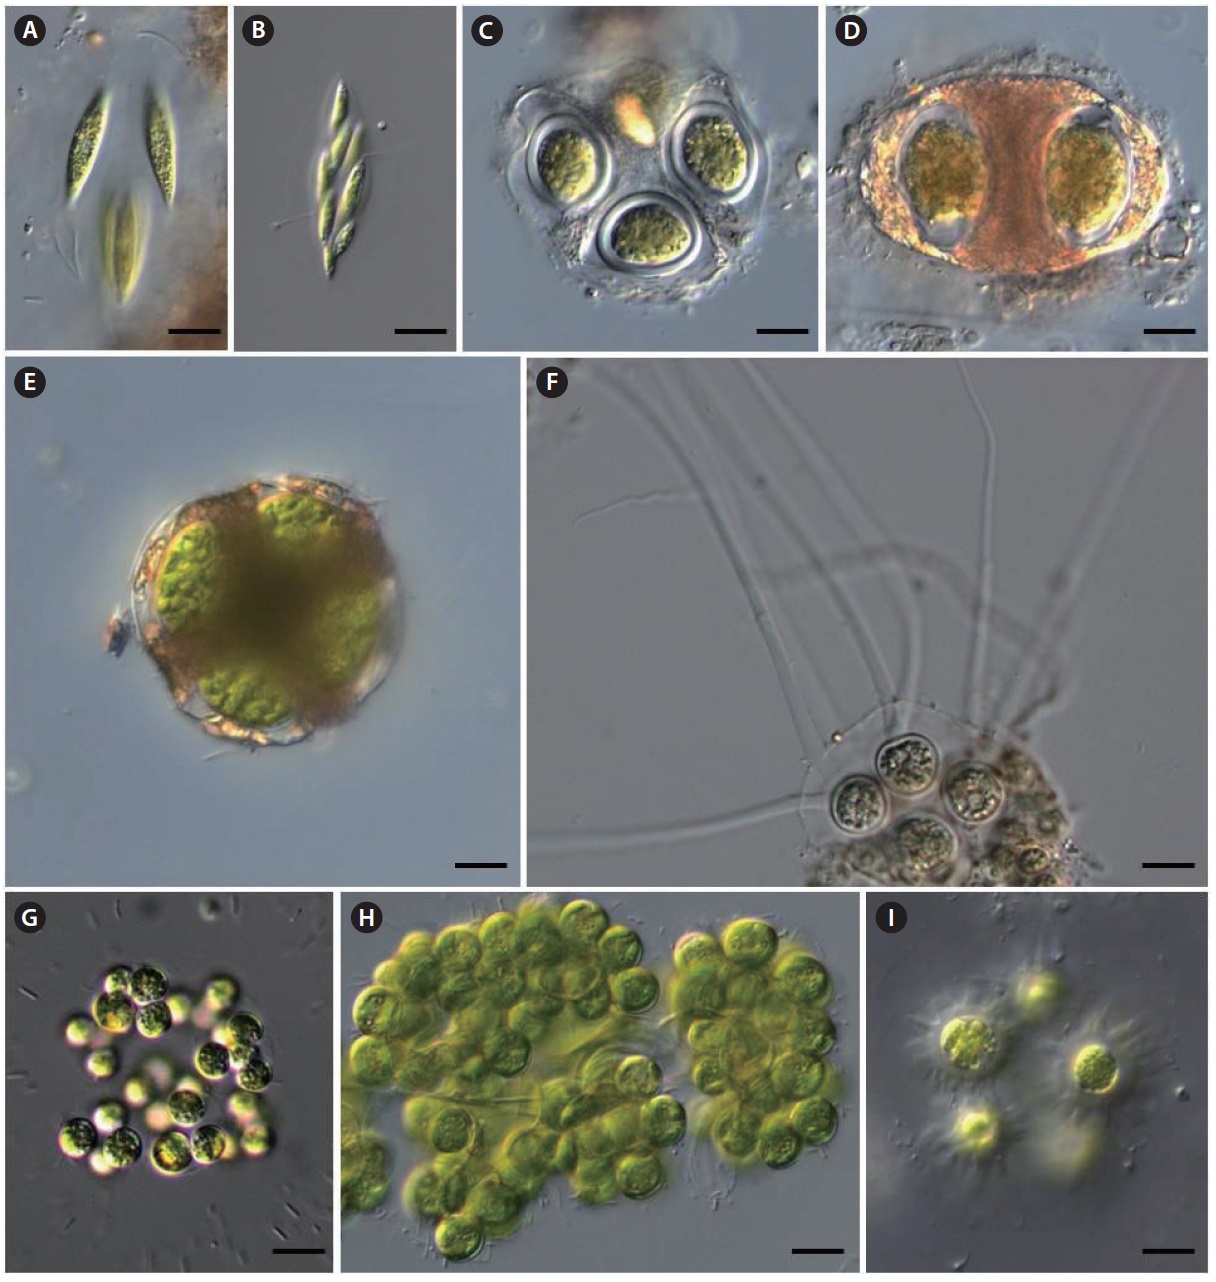 (A, B) Elakatothrix genevensis, (C-E) Gloeotaenium loitelsbergianum, (F) Gloeochaete wittrockiana, (G) Coenococcus planktonicus, (H) Botryosphaerella
sudetica, (I) Echinocoleum elegans. Scale bars, 10 μm.